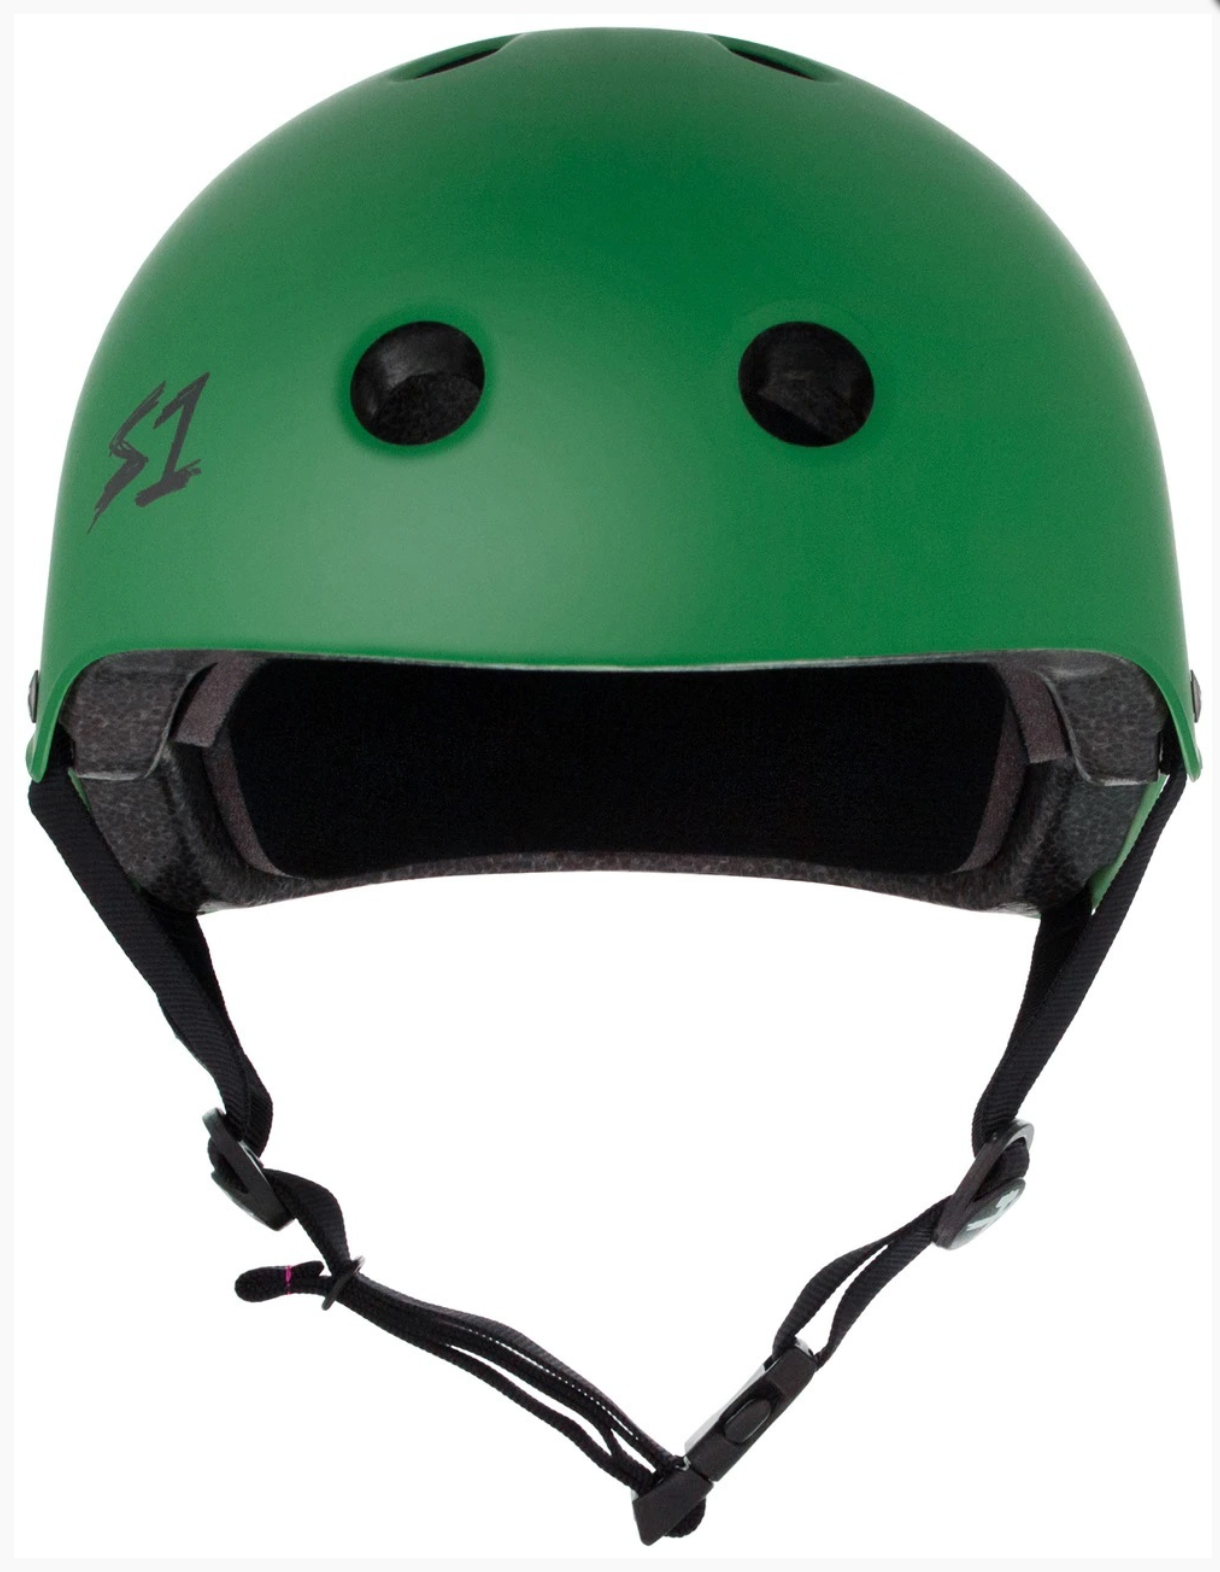 S1 Lifer Helmet Kelly Green Matte